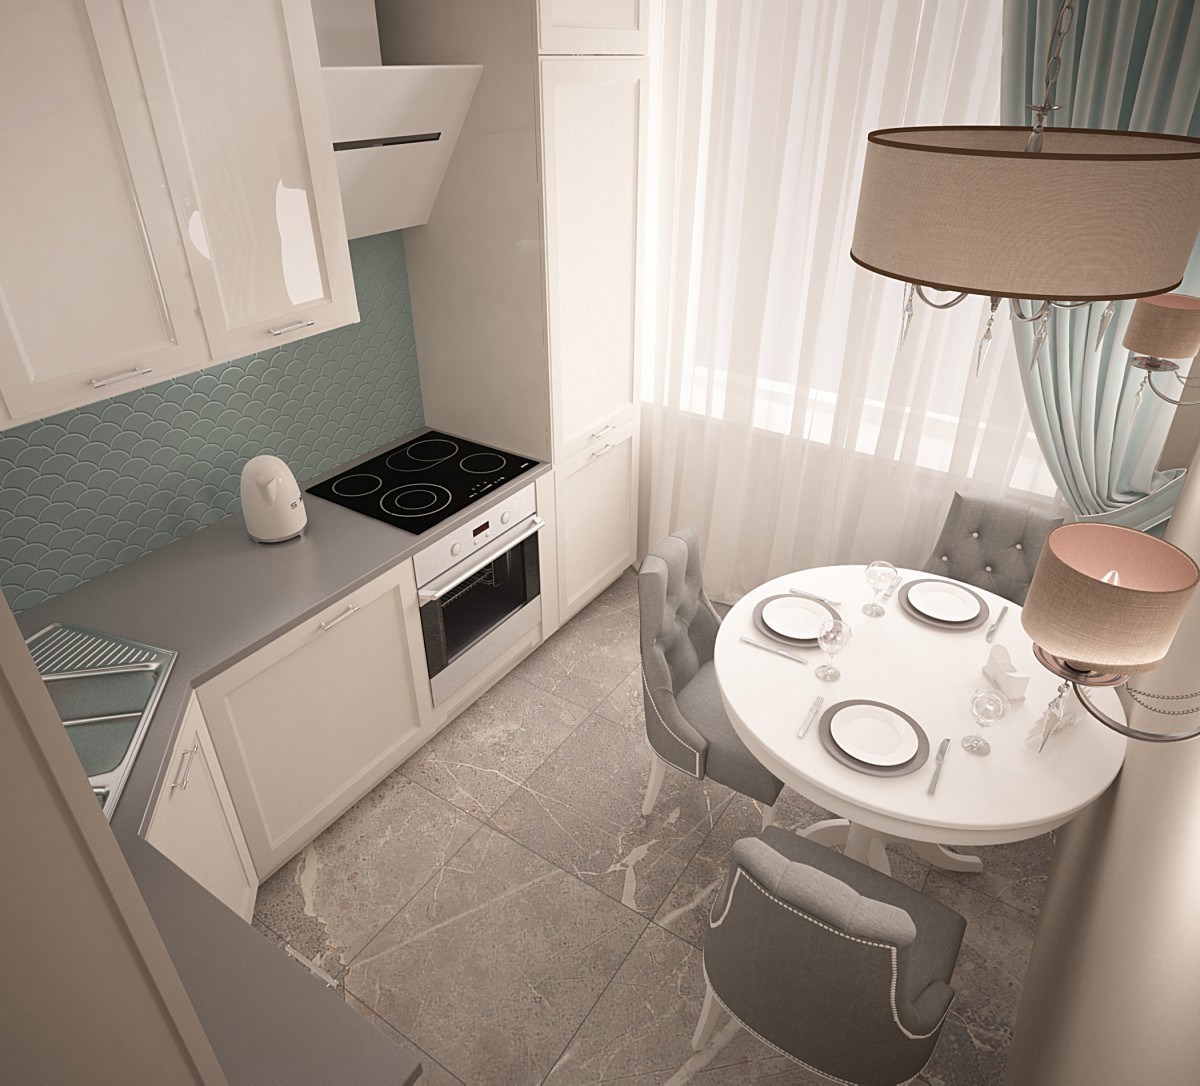 Дизайн кухни 7 кв. м с холодильником (24 фото) - новинки 2021-2022 года